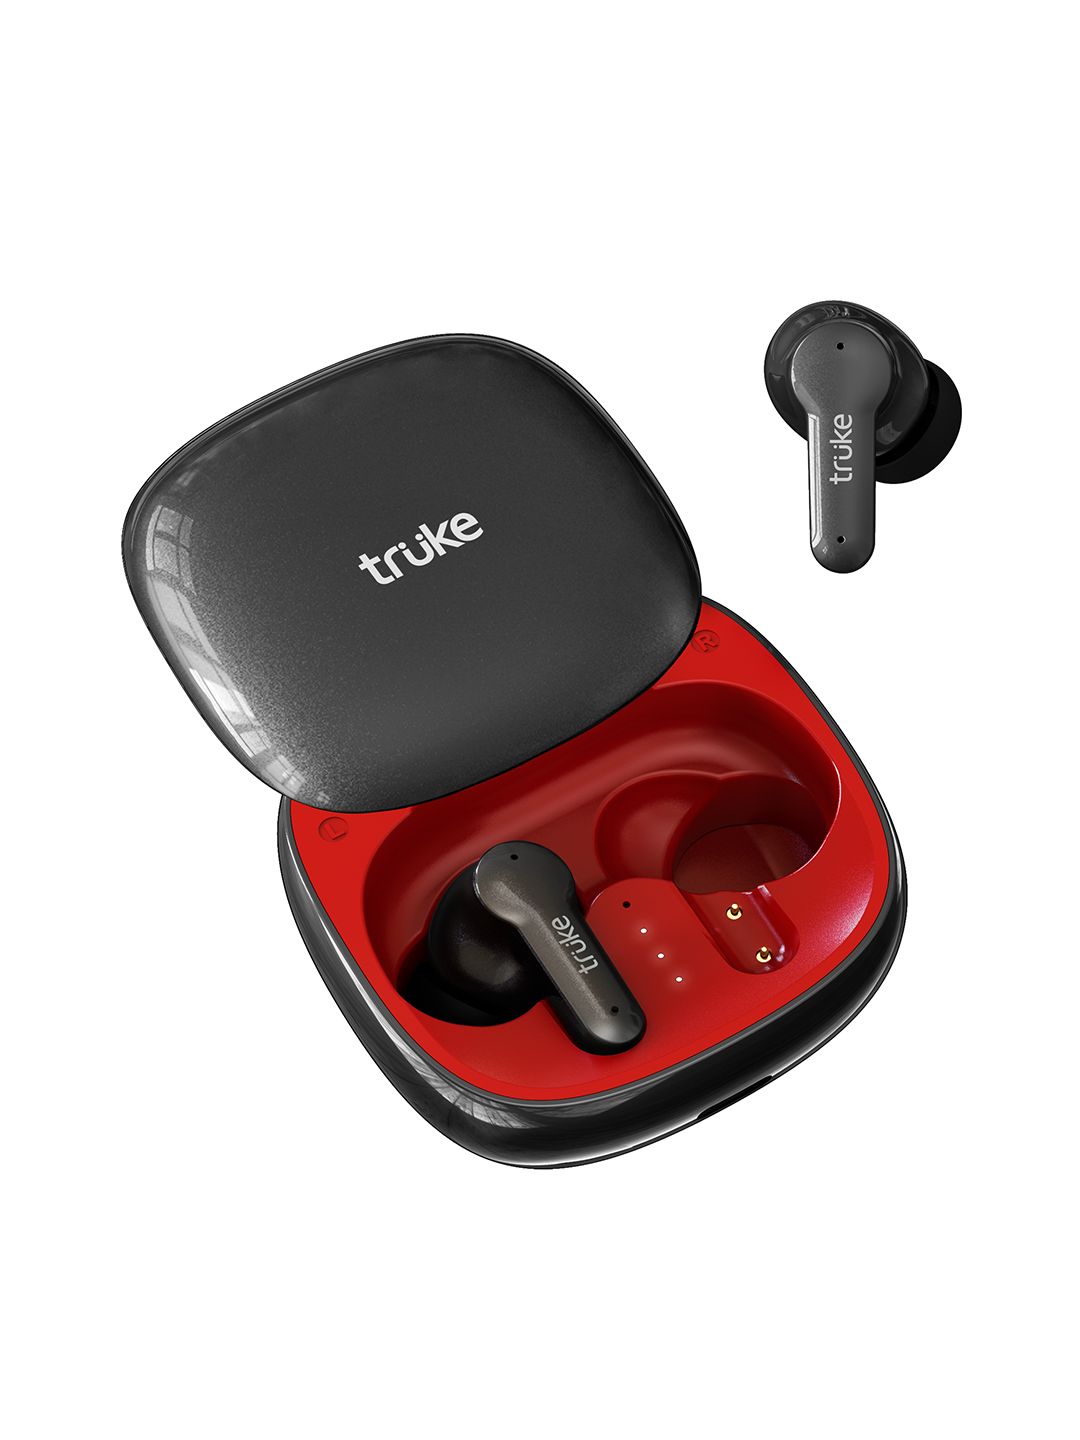 truke Buds S2 True Wireless Earbuds - Black Price in India